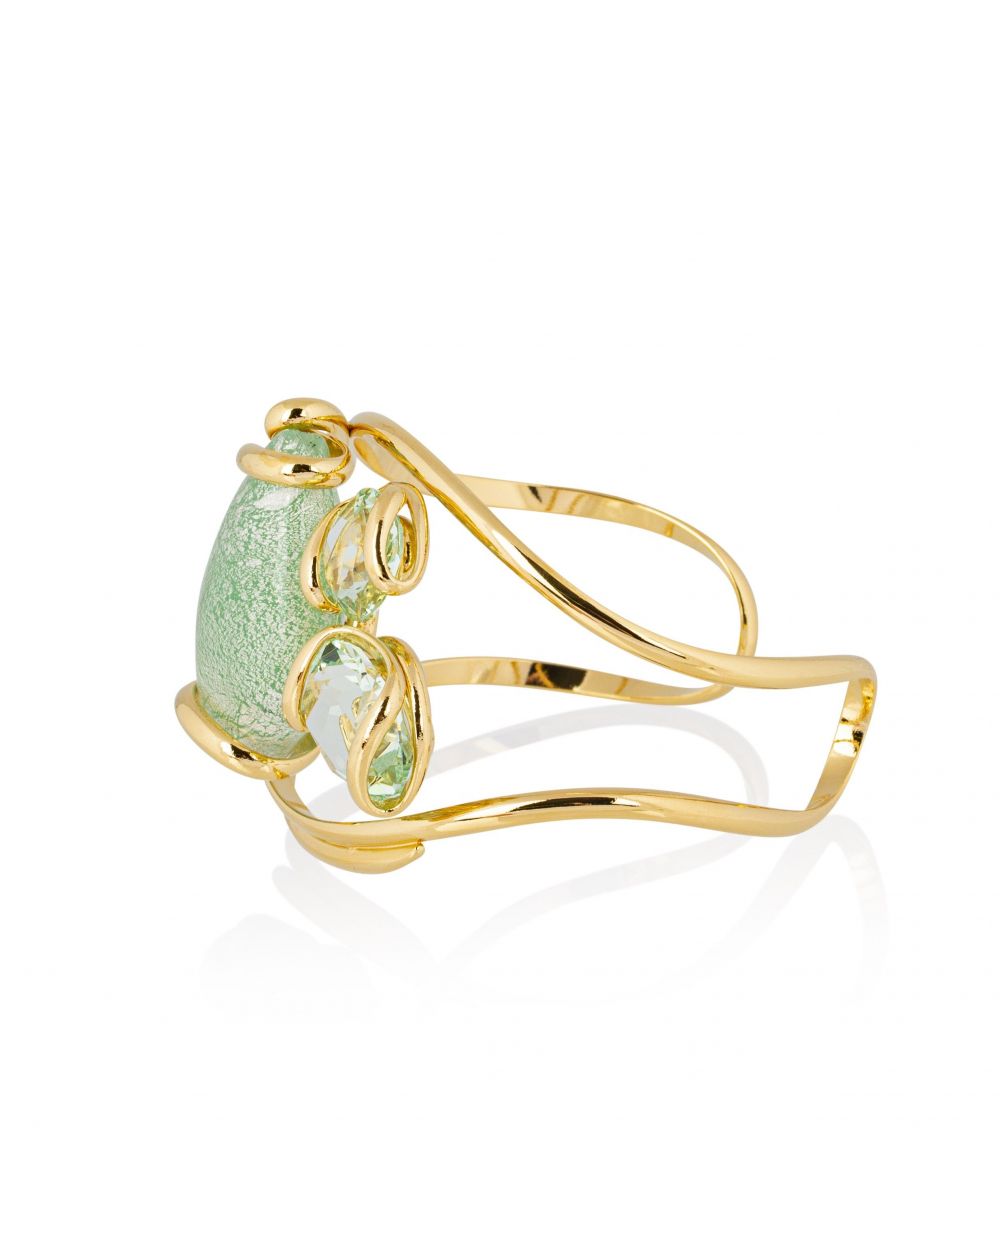 Andrea Marazzini bijoux - Bracelet cristal Swarovski Big Drop Venice Peridot